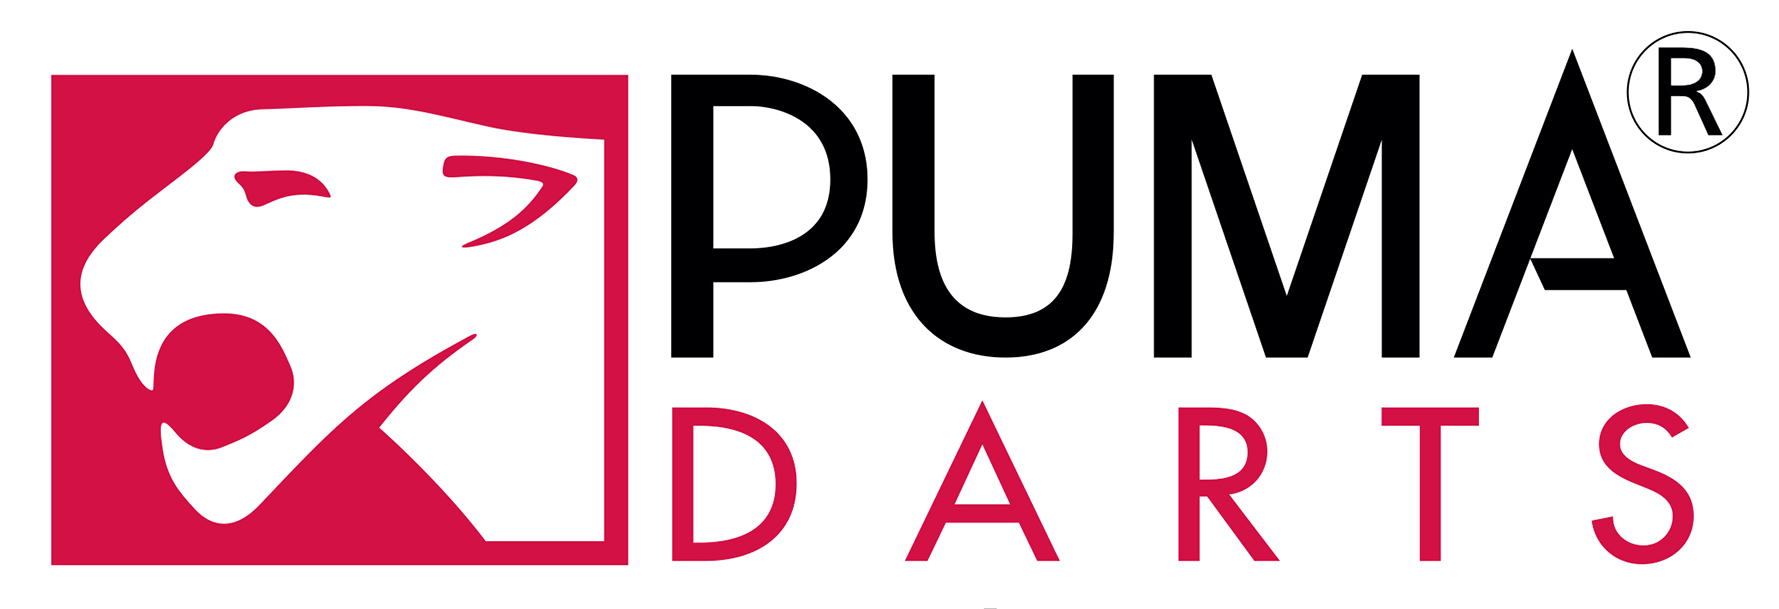 Puma Darts logo whitebck